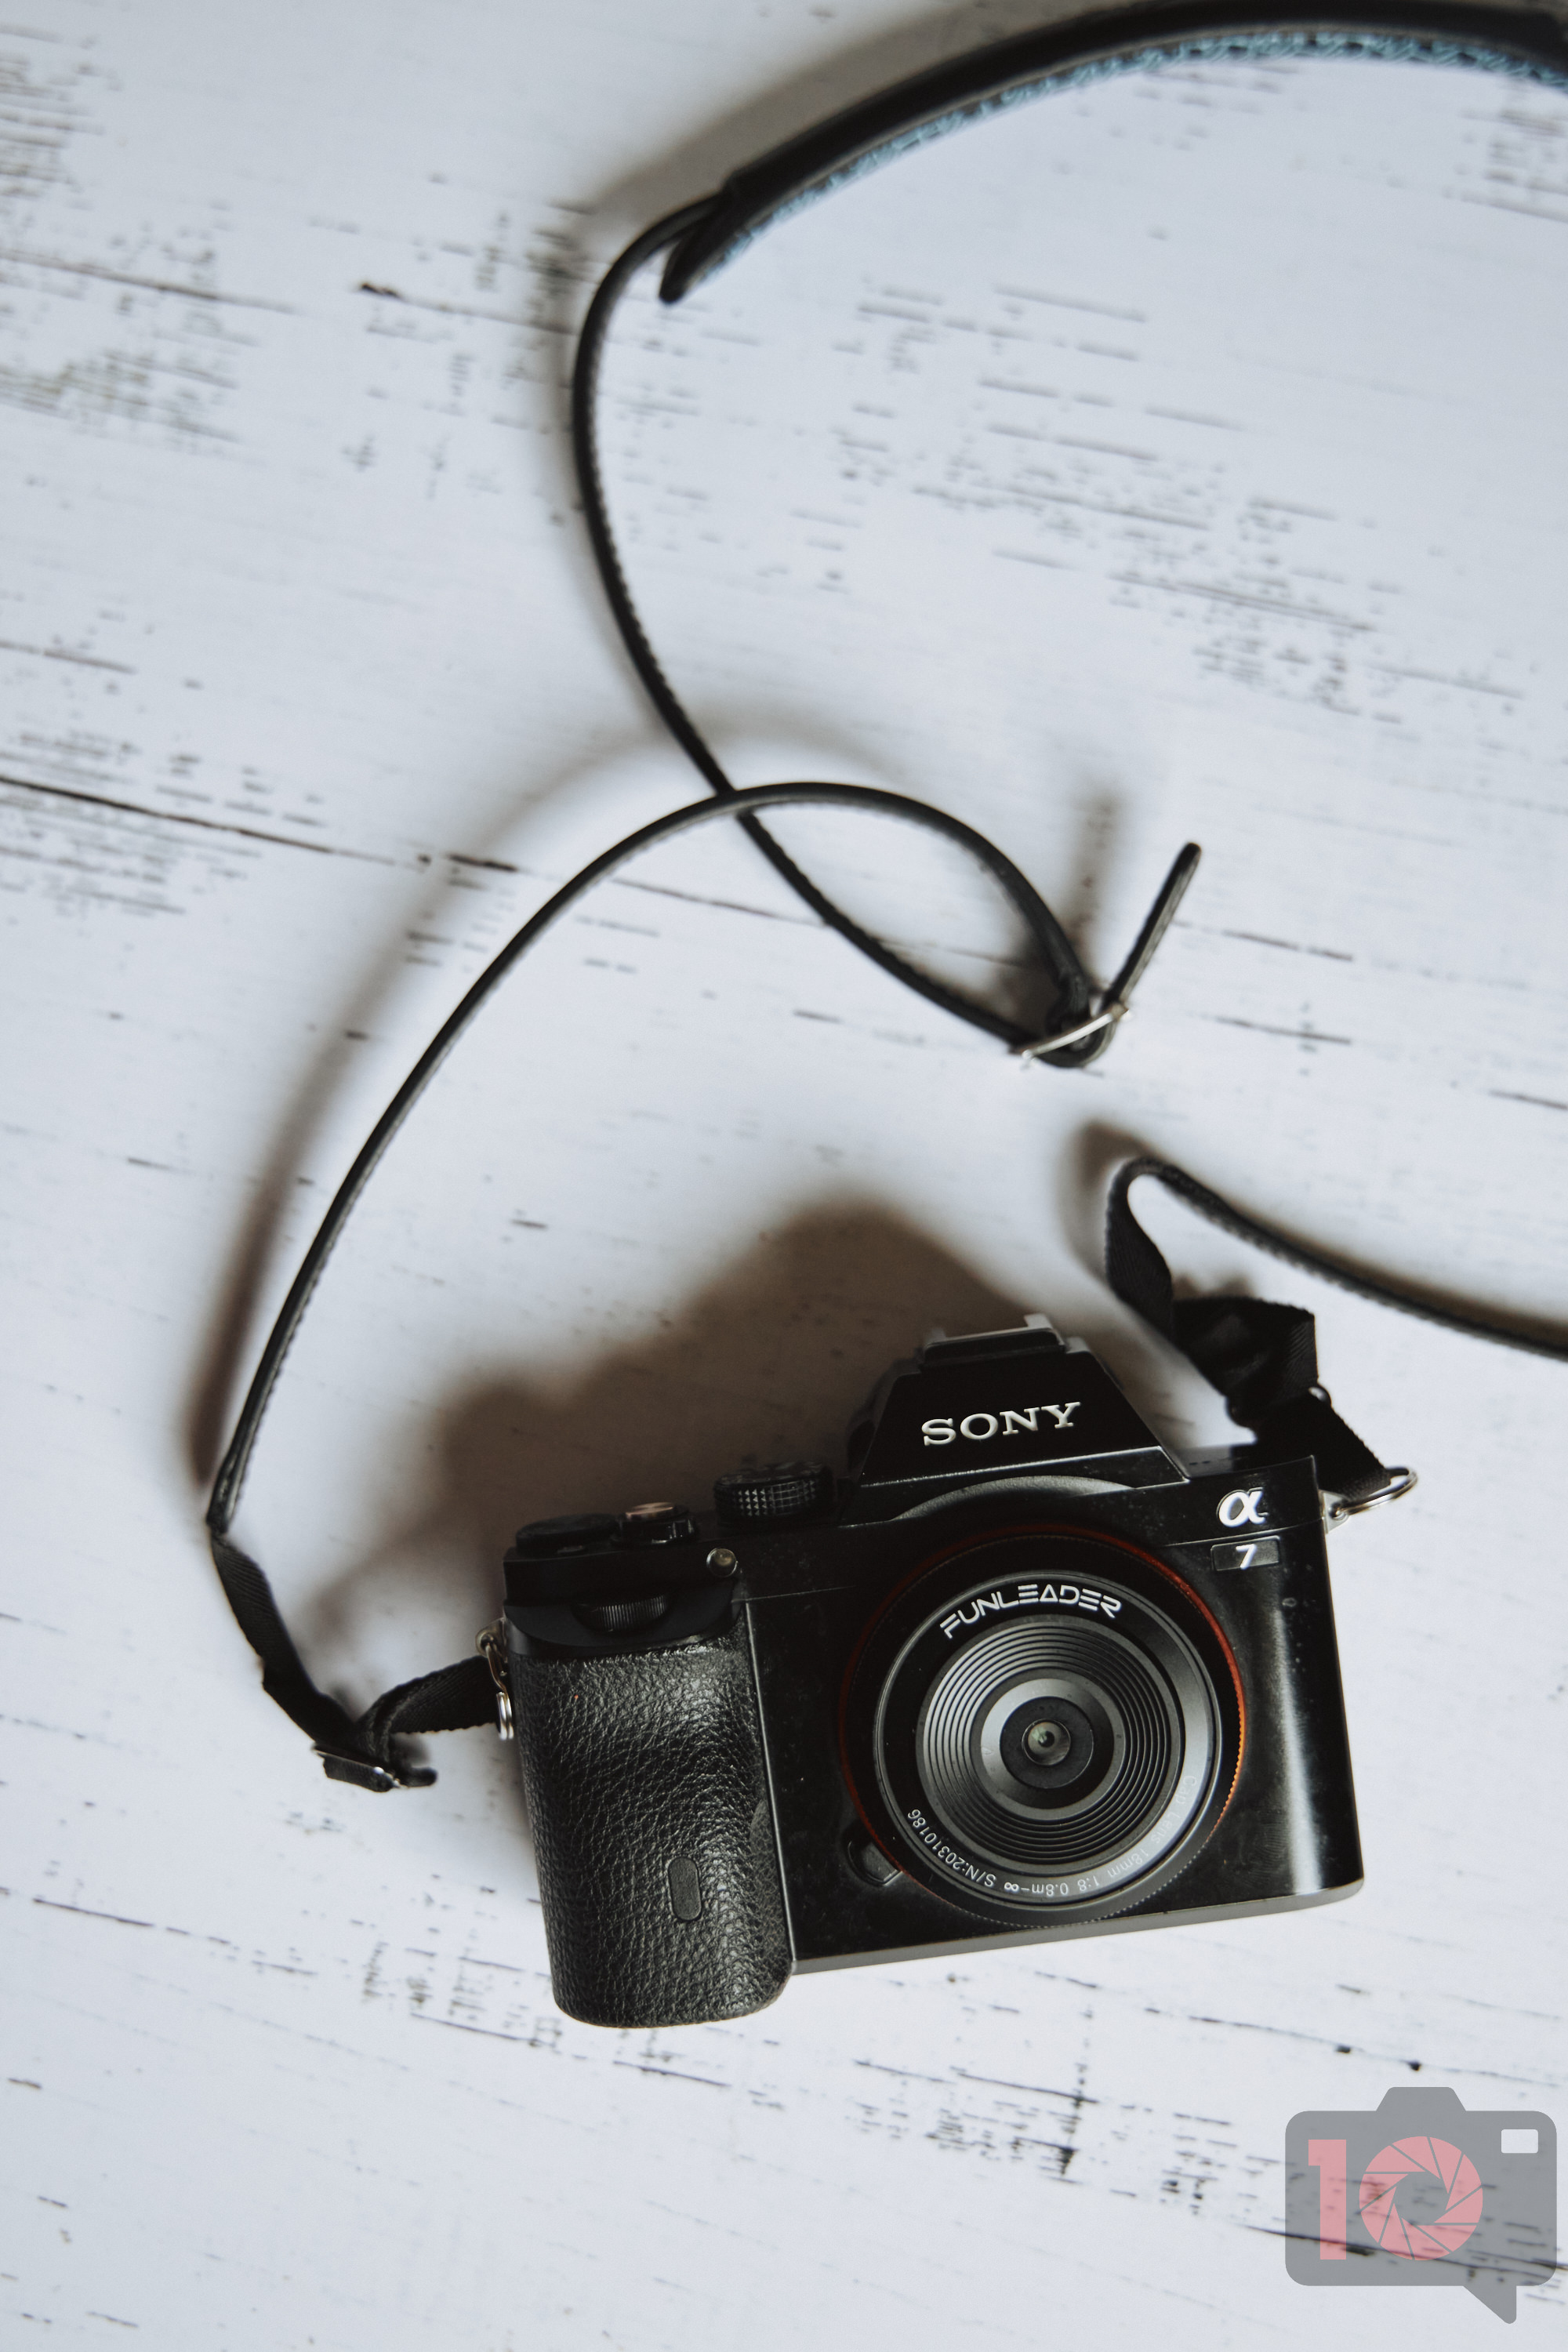 Sony Alpha 7 Camera Review - Videomaker